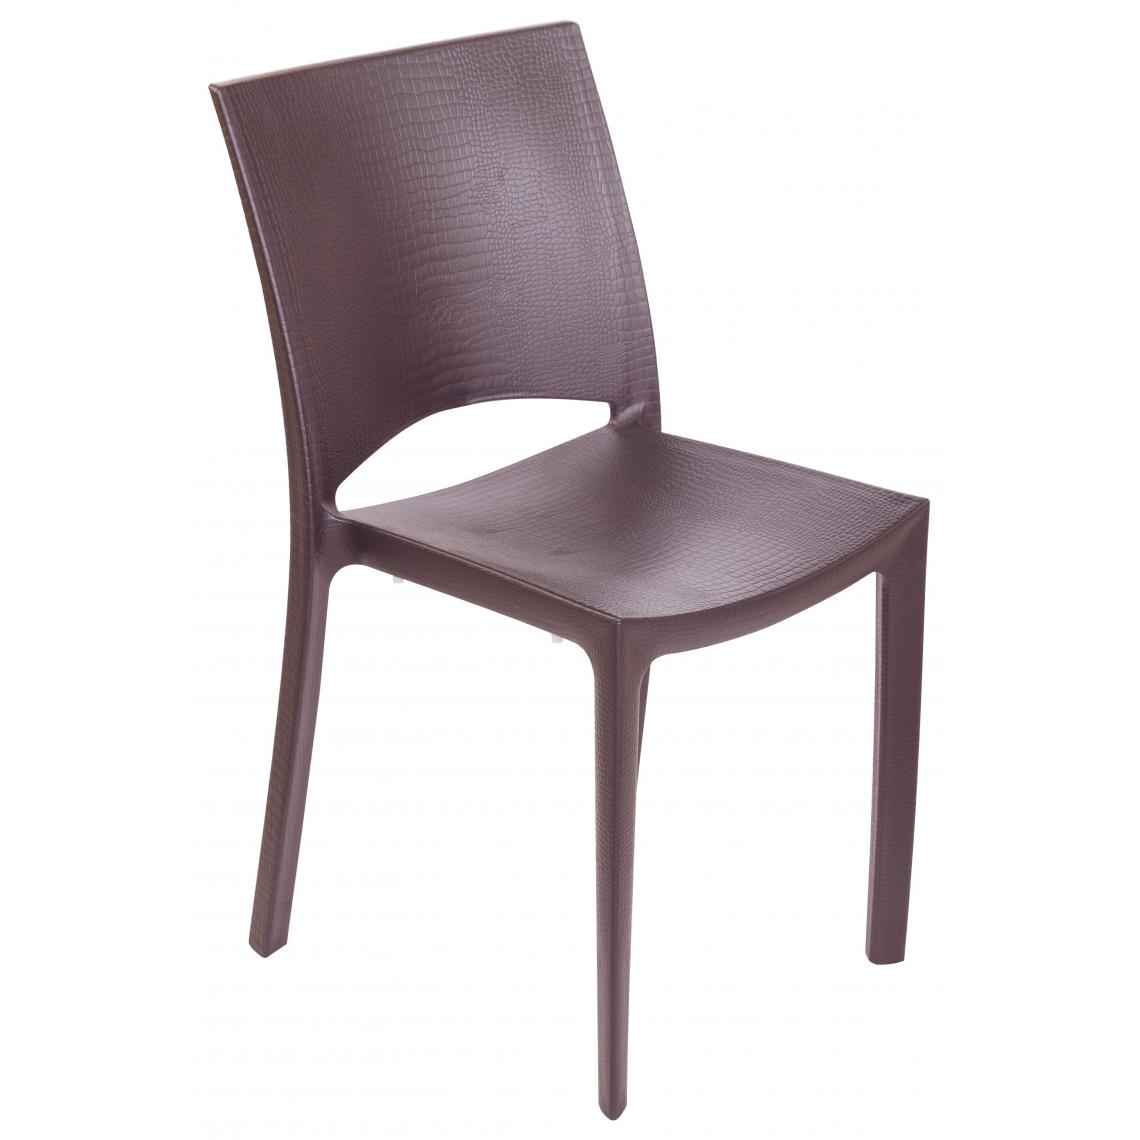 3S. x Home - Chaise Design Marron Effet Croco ARLEQUIN - Chaises